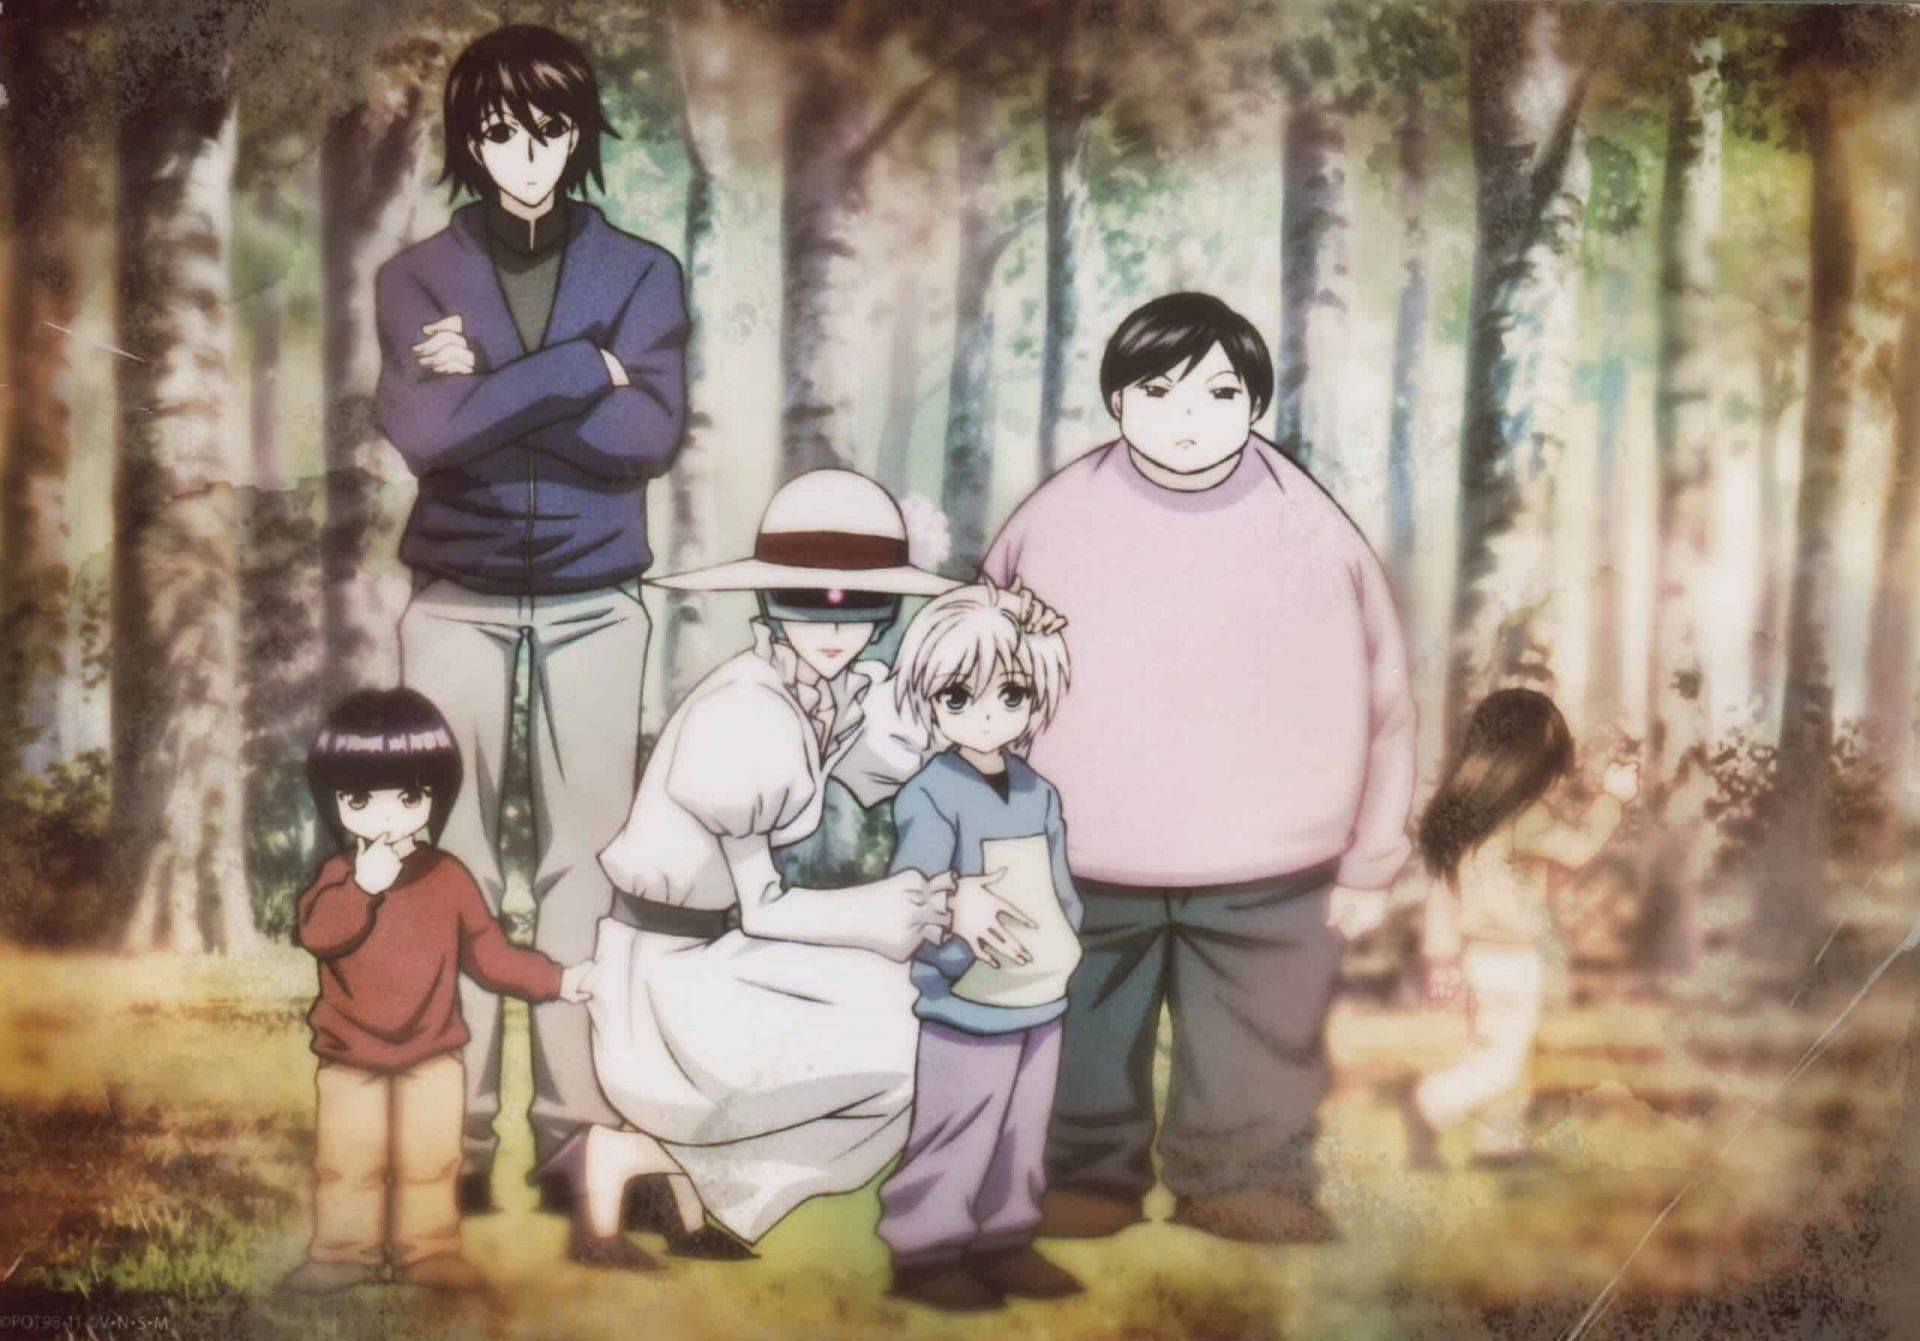 Premium Photo | Illustration of anime happy family portrait with flowers